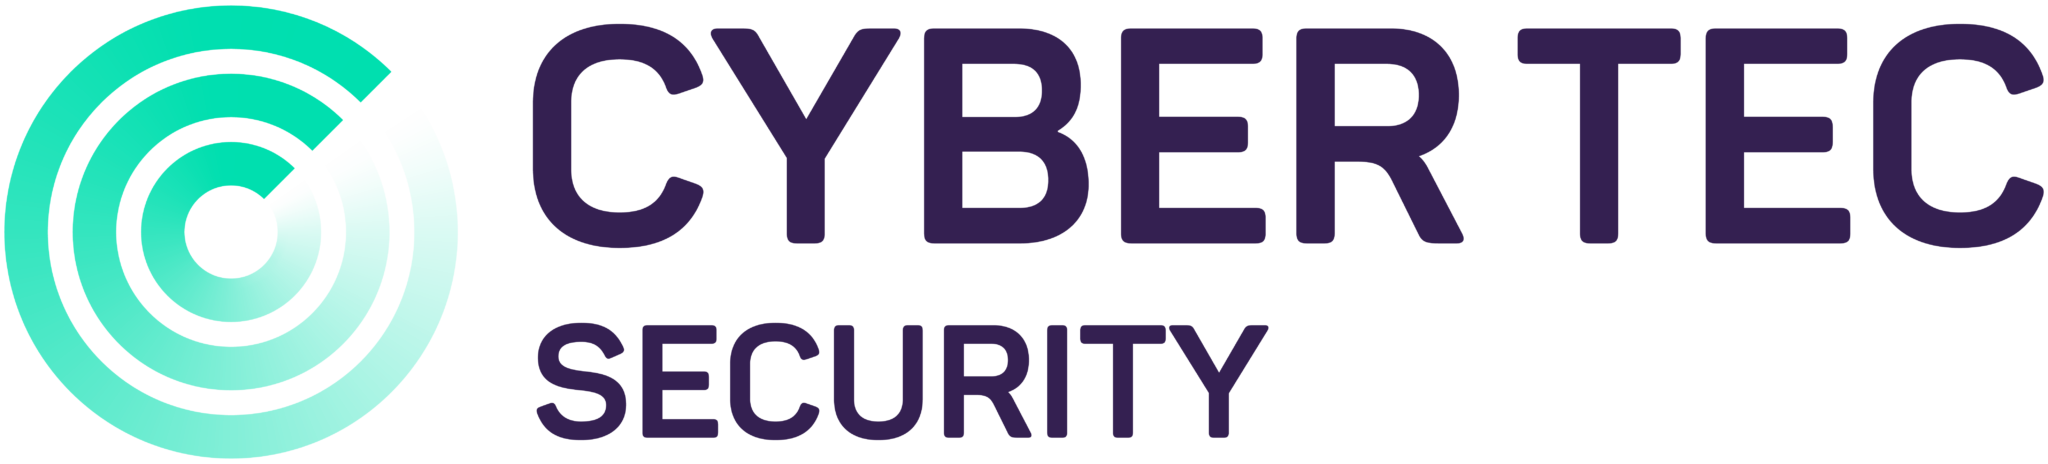 cyber tec security logo